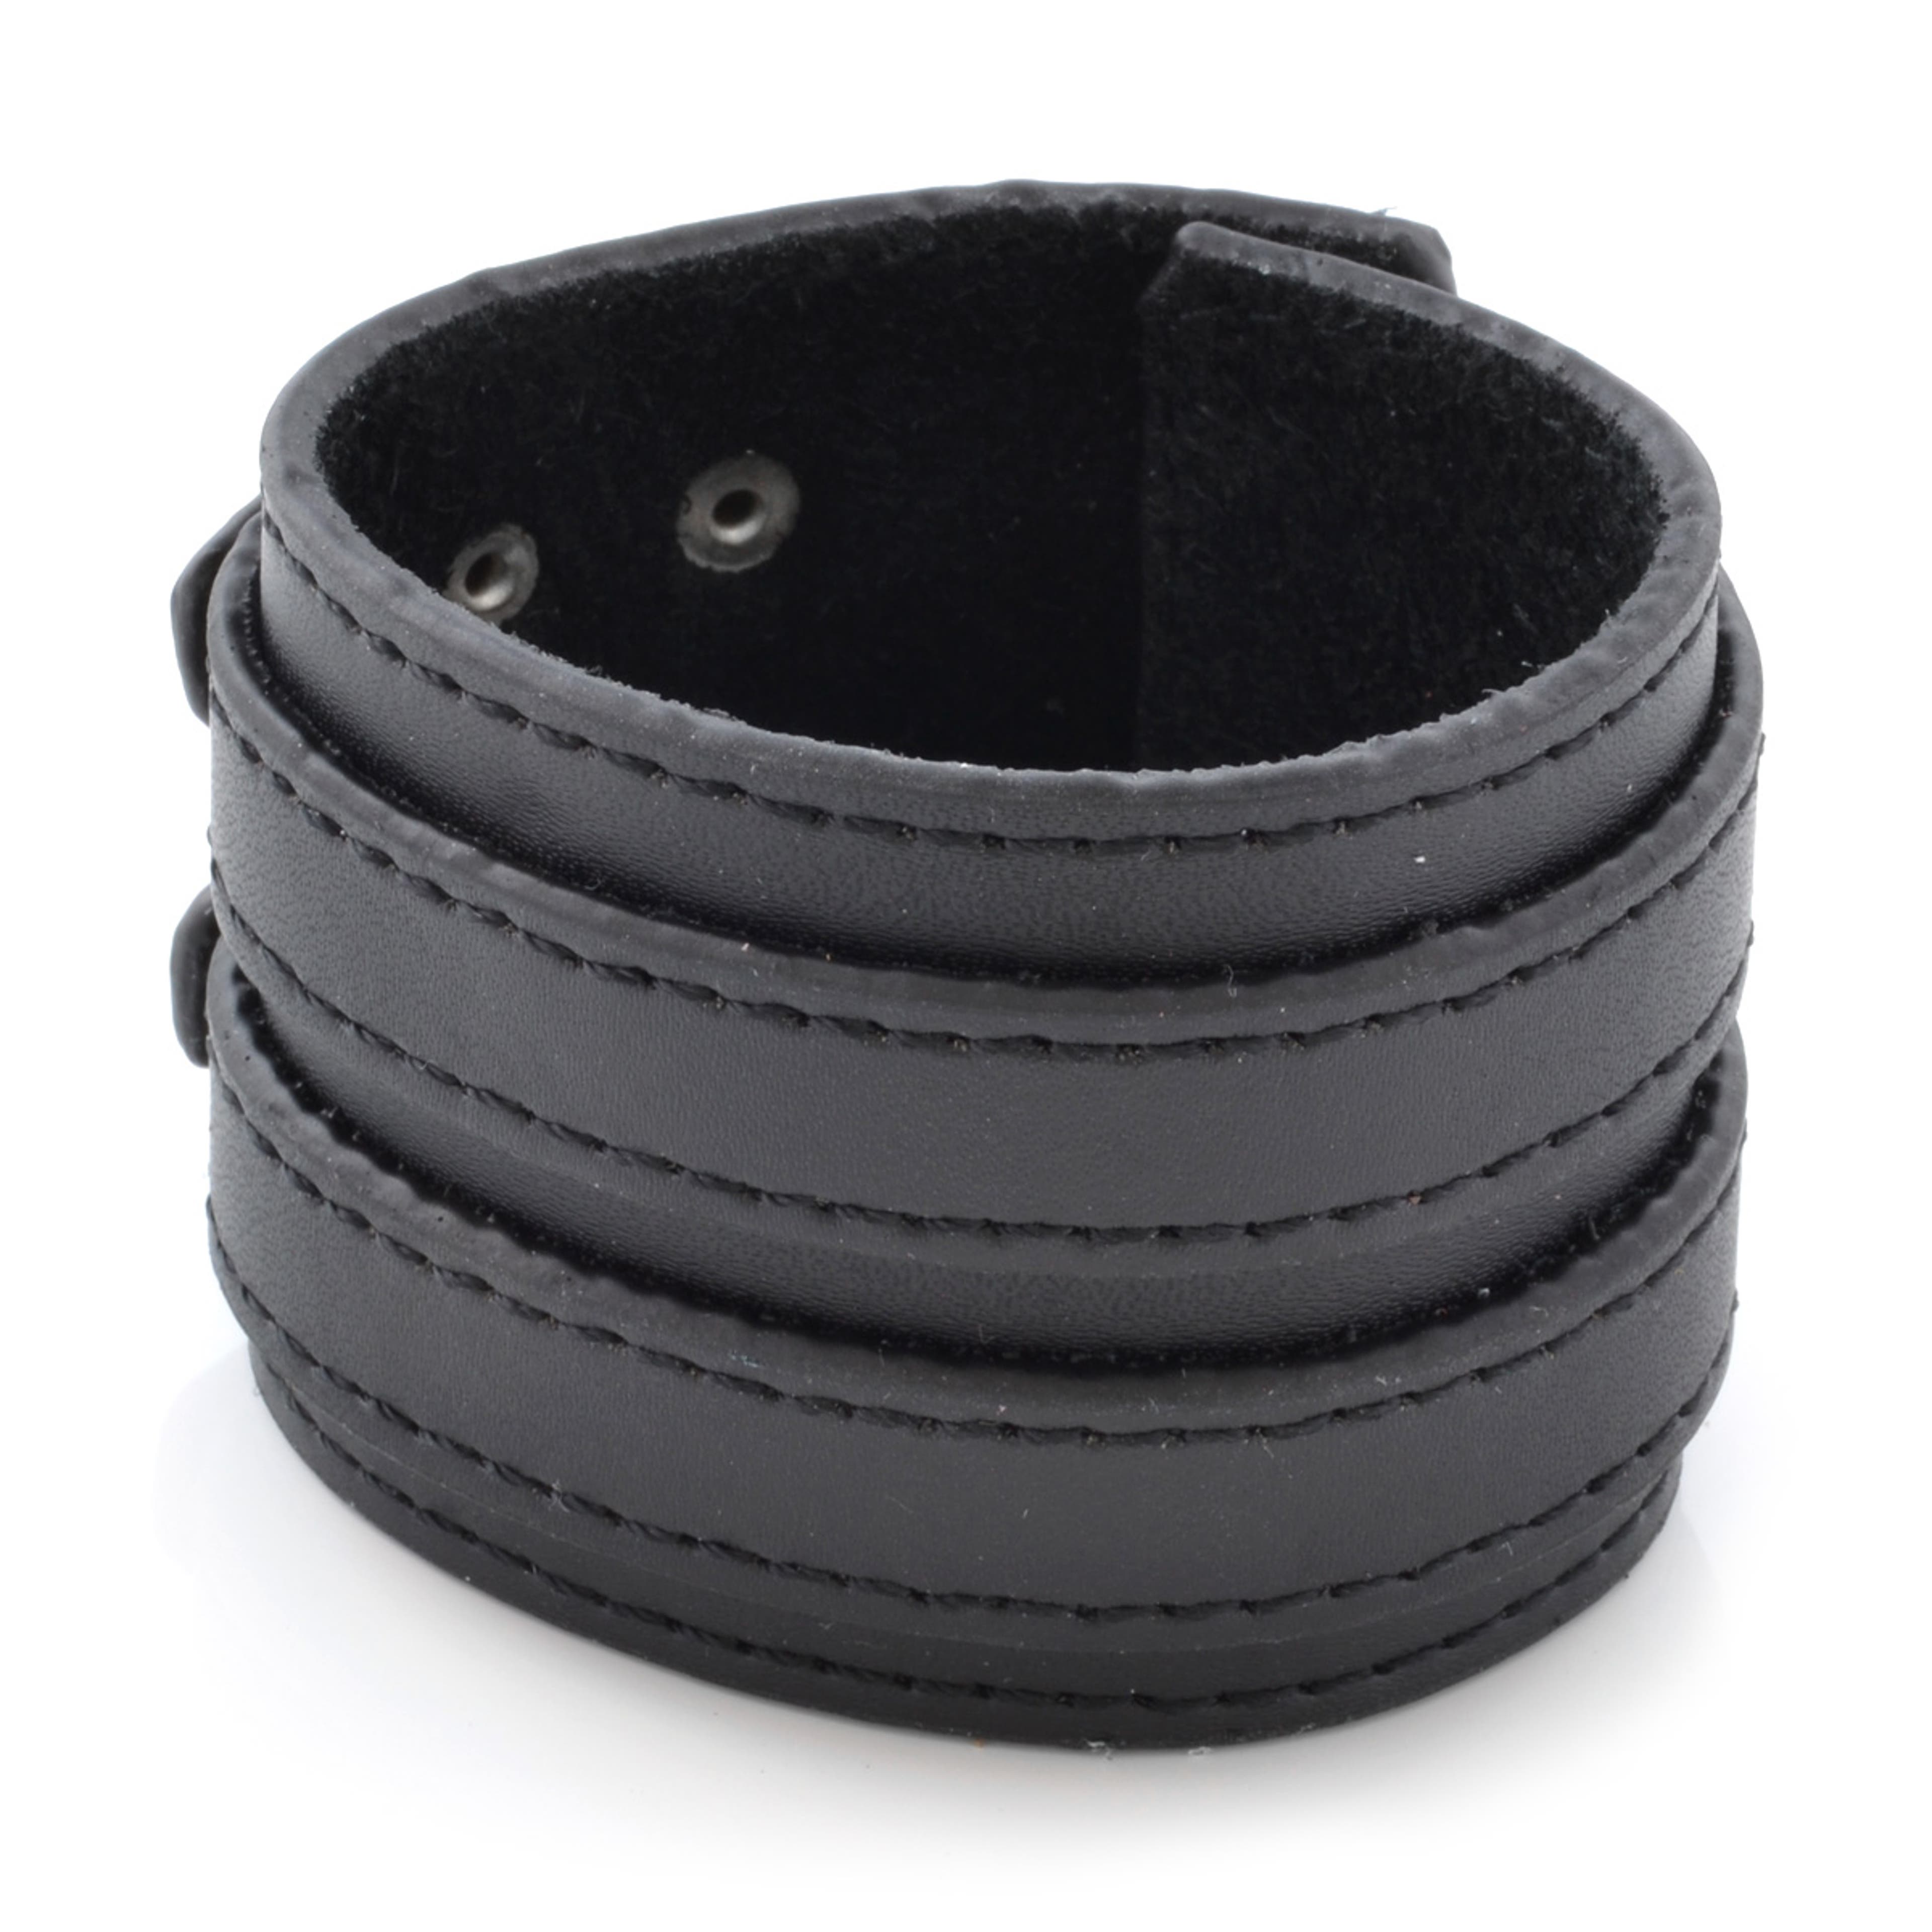 Simple Black Double Locked Leather Cuff Bracelet